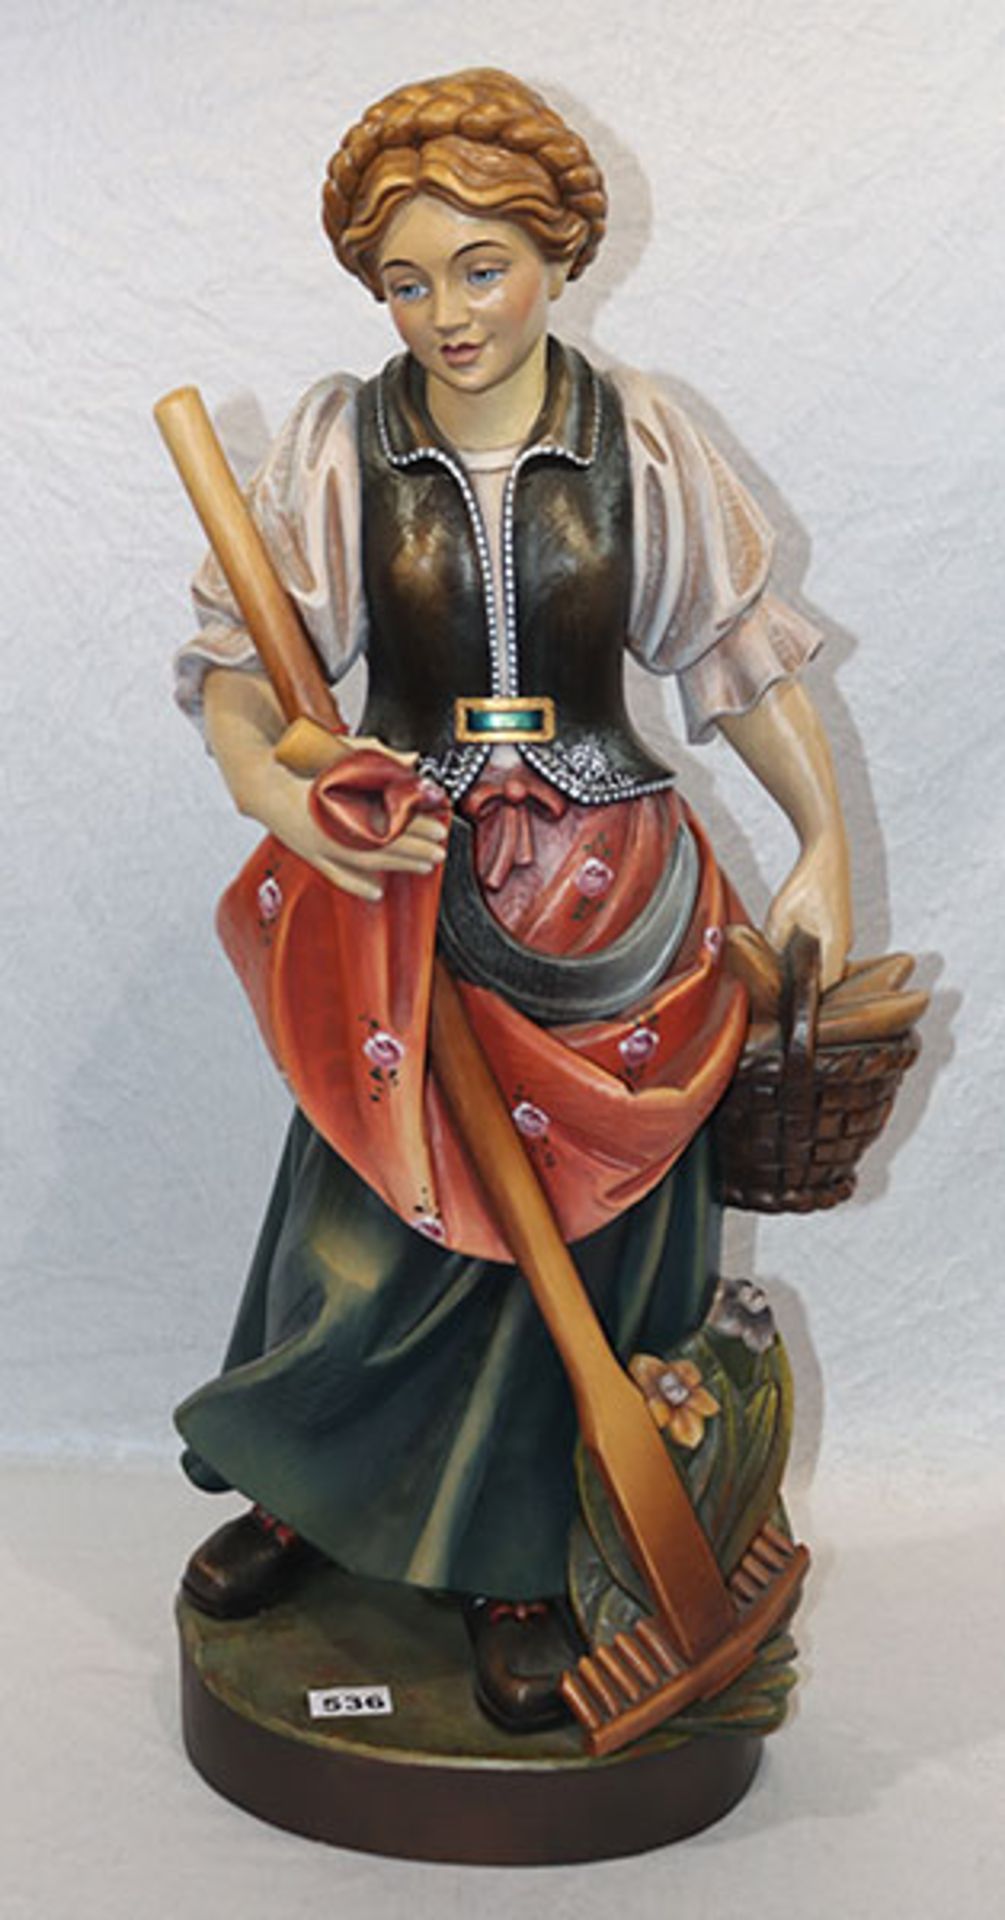 Holz Figurenskulptur 'Bäuerin', farbig gefaßt, H 84 cm